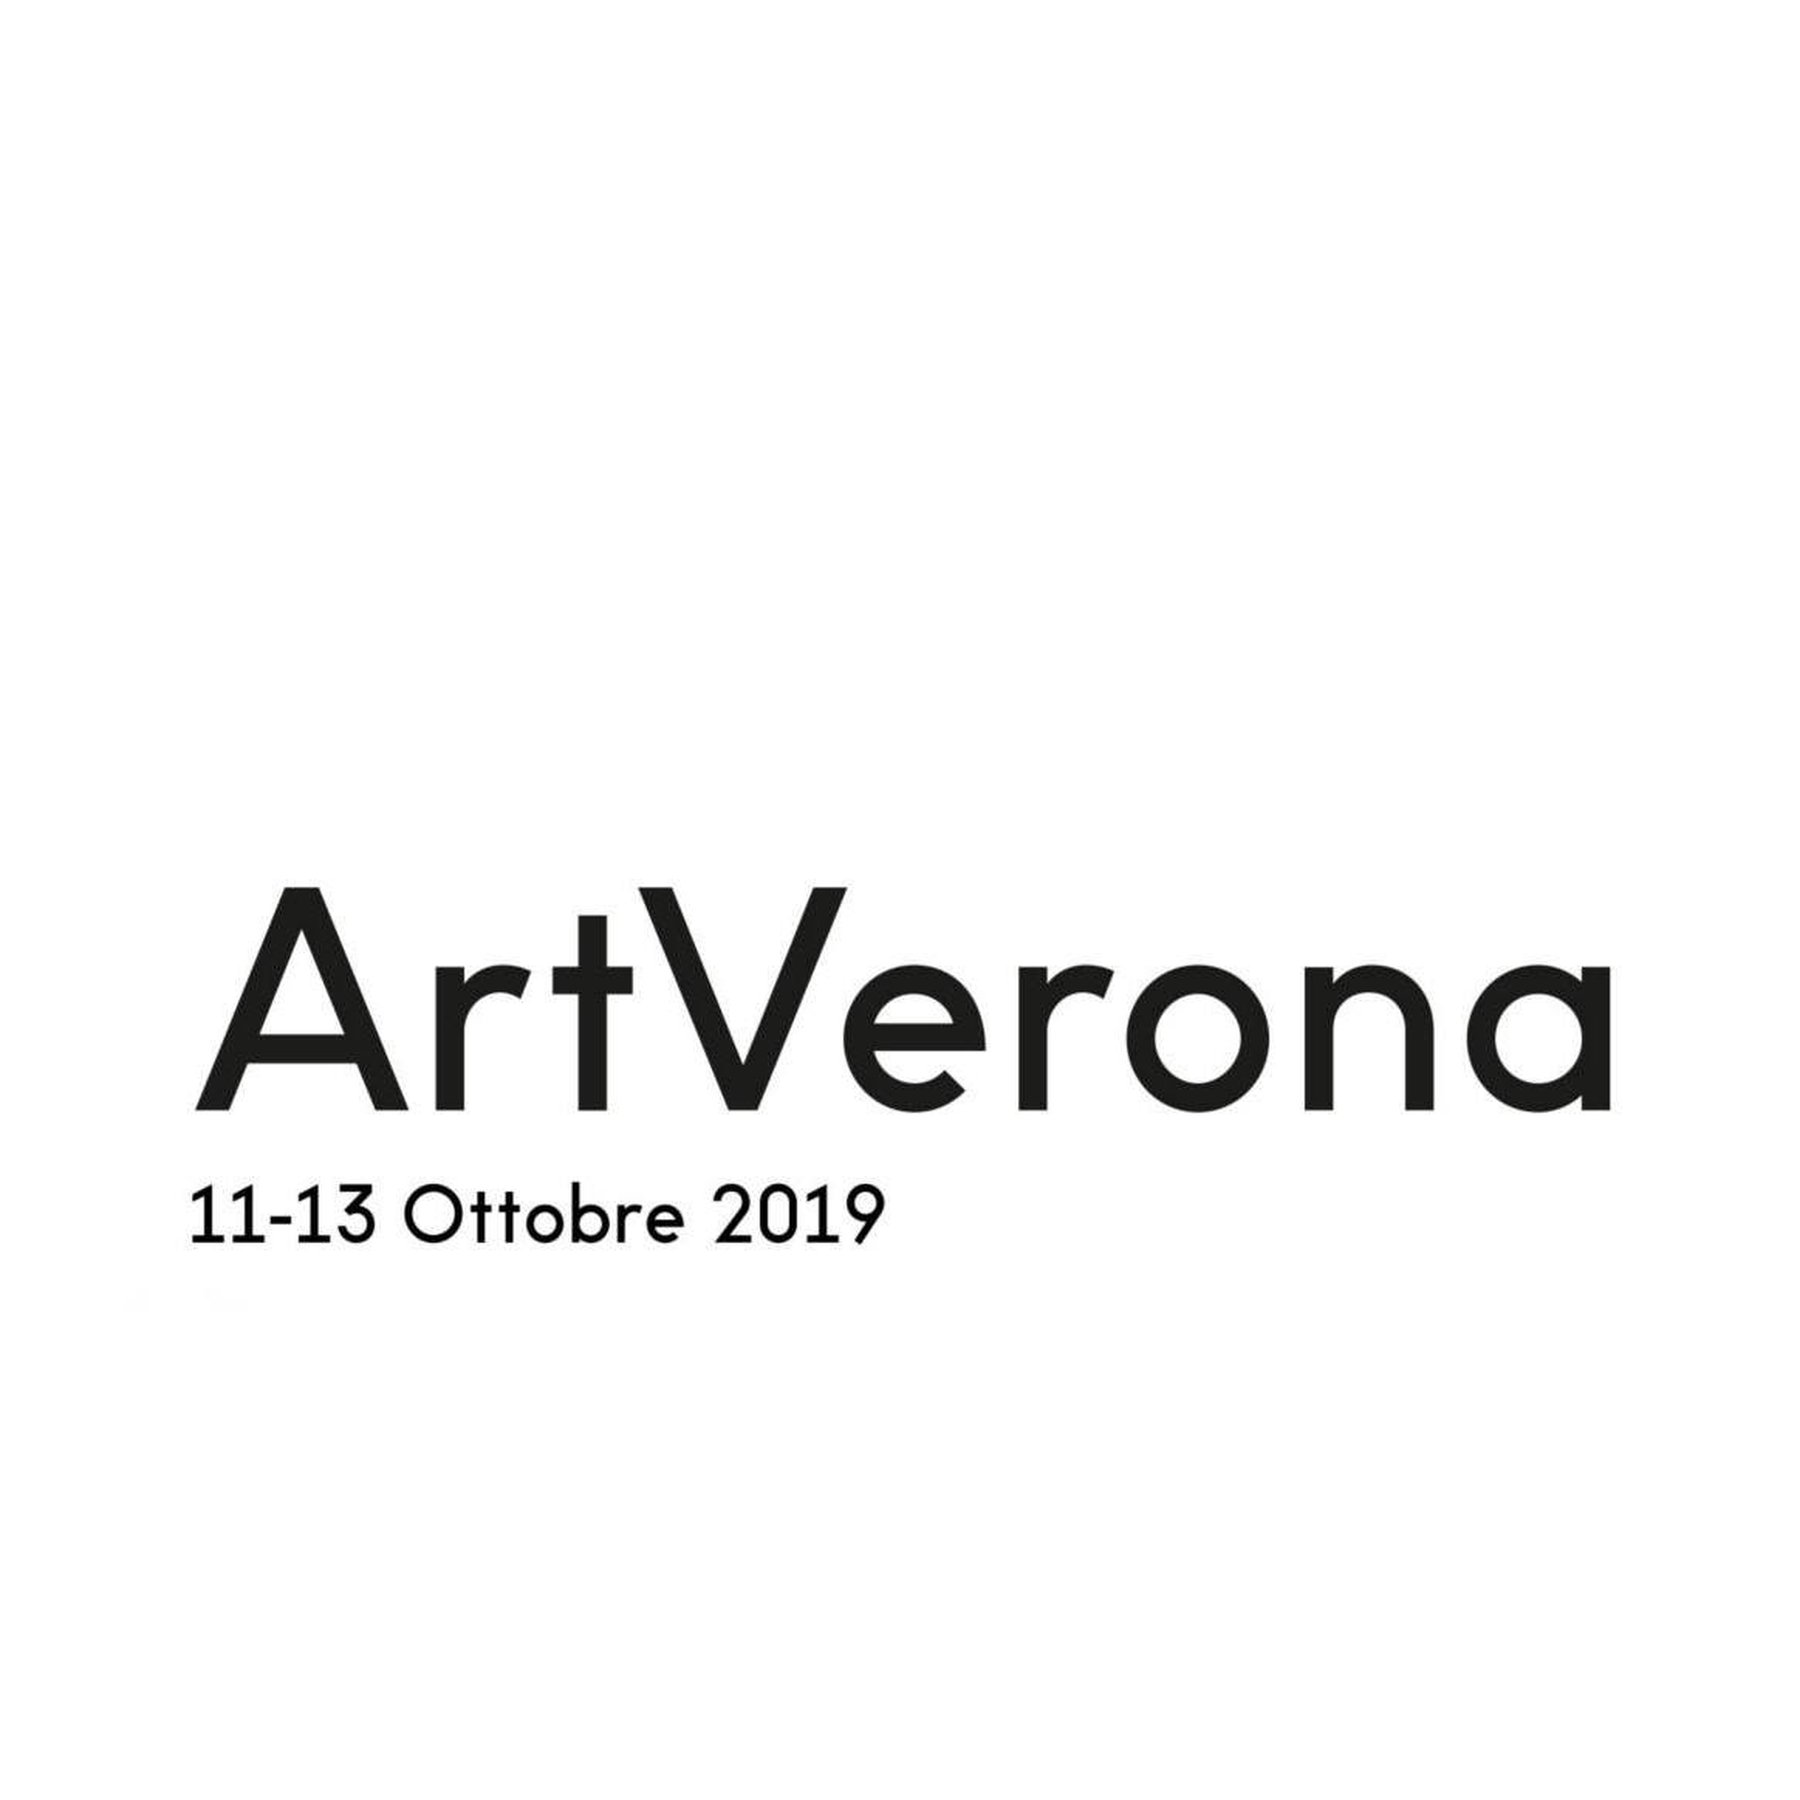 Art Verona